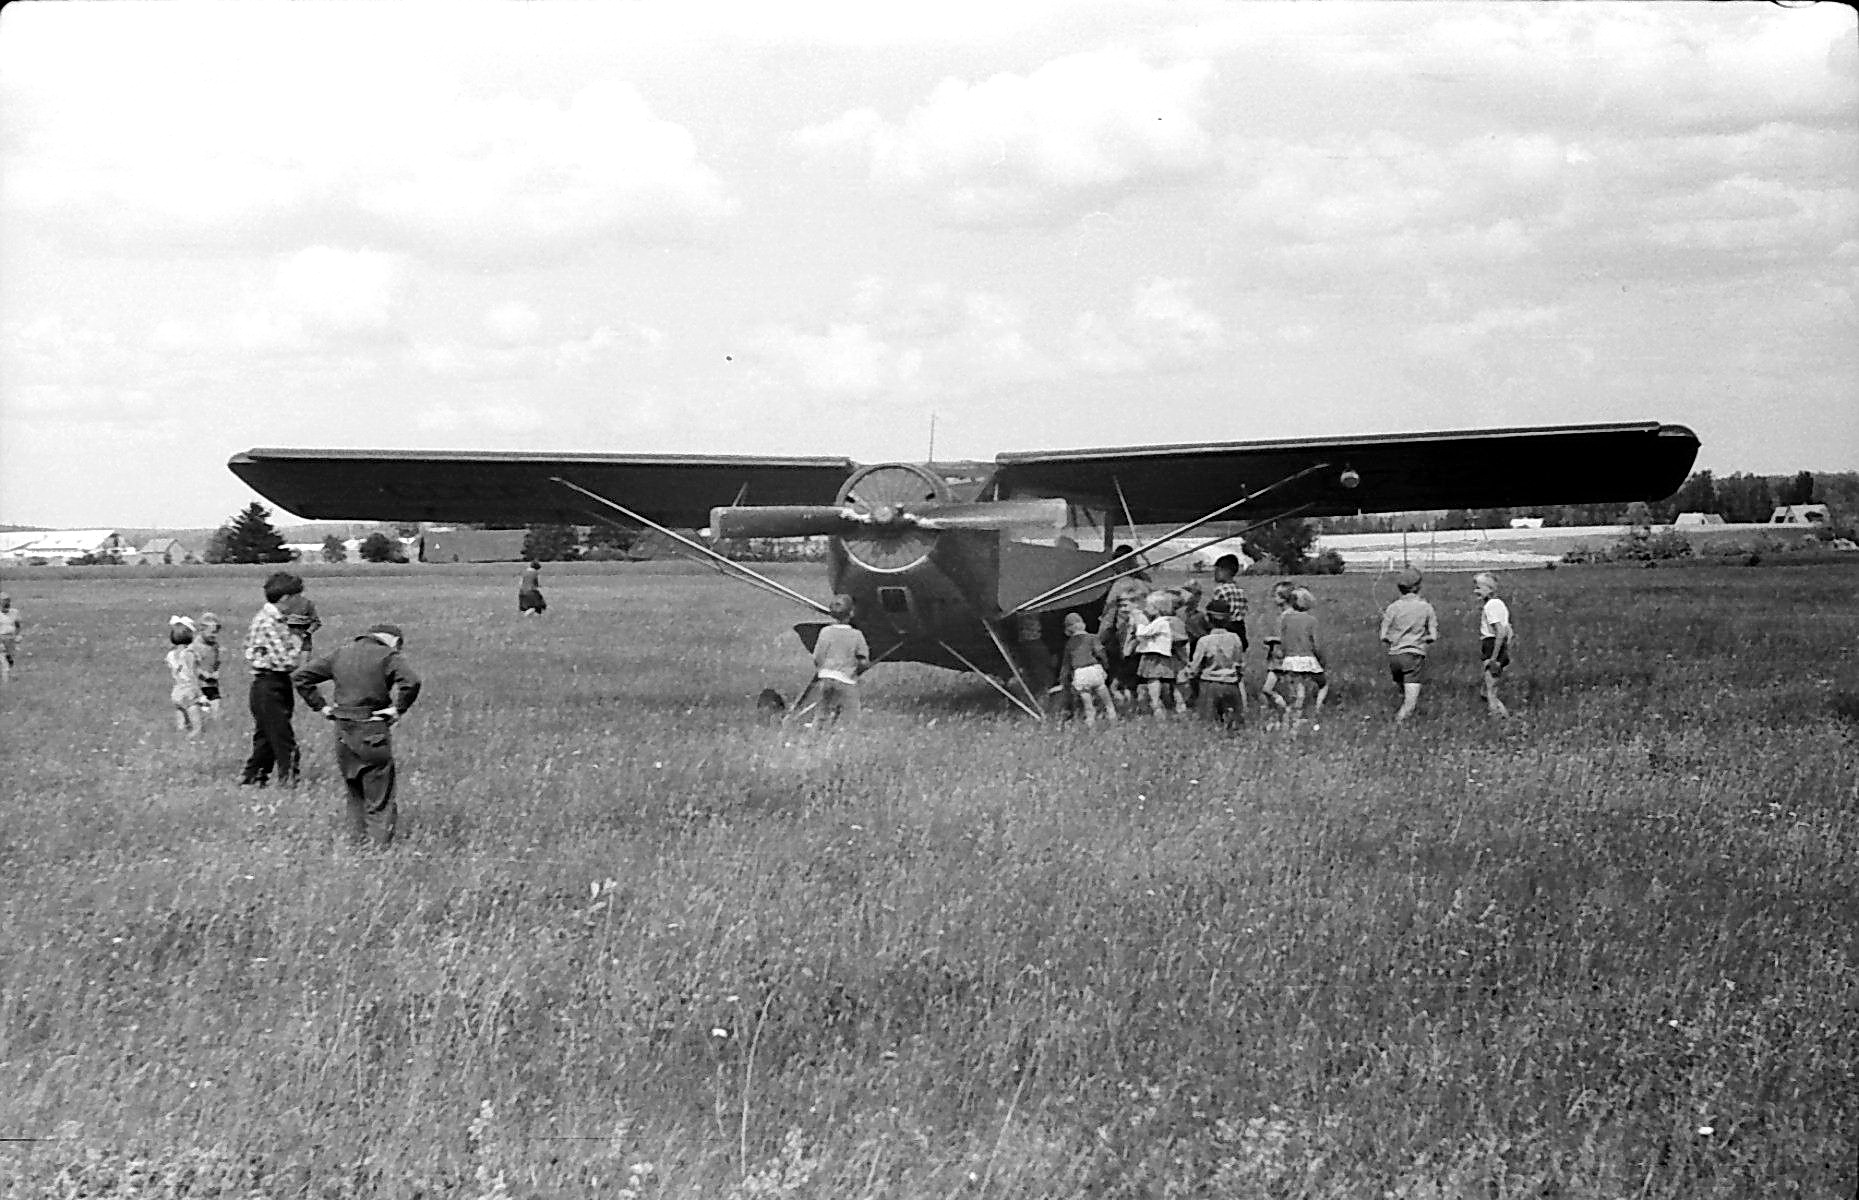 Põlva Airport in 1962